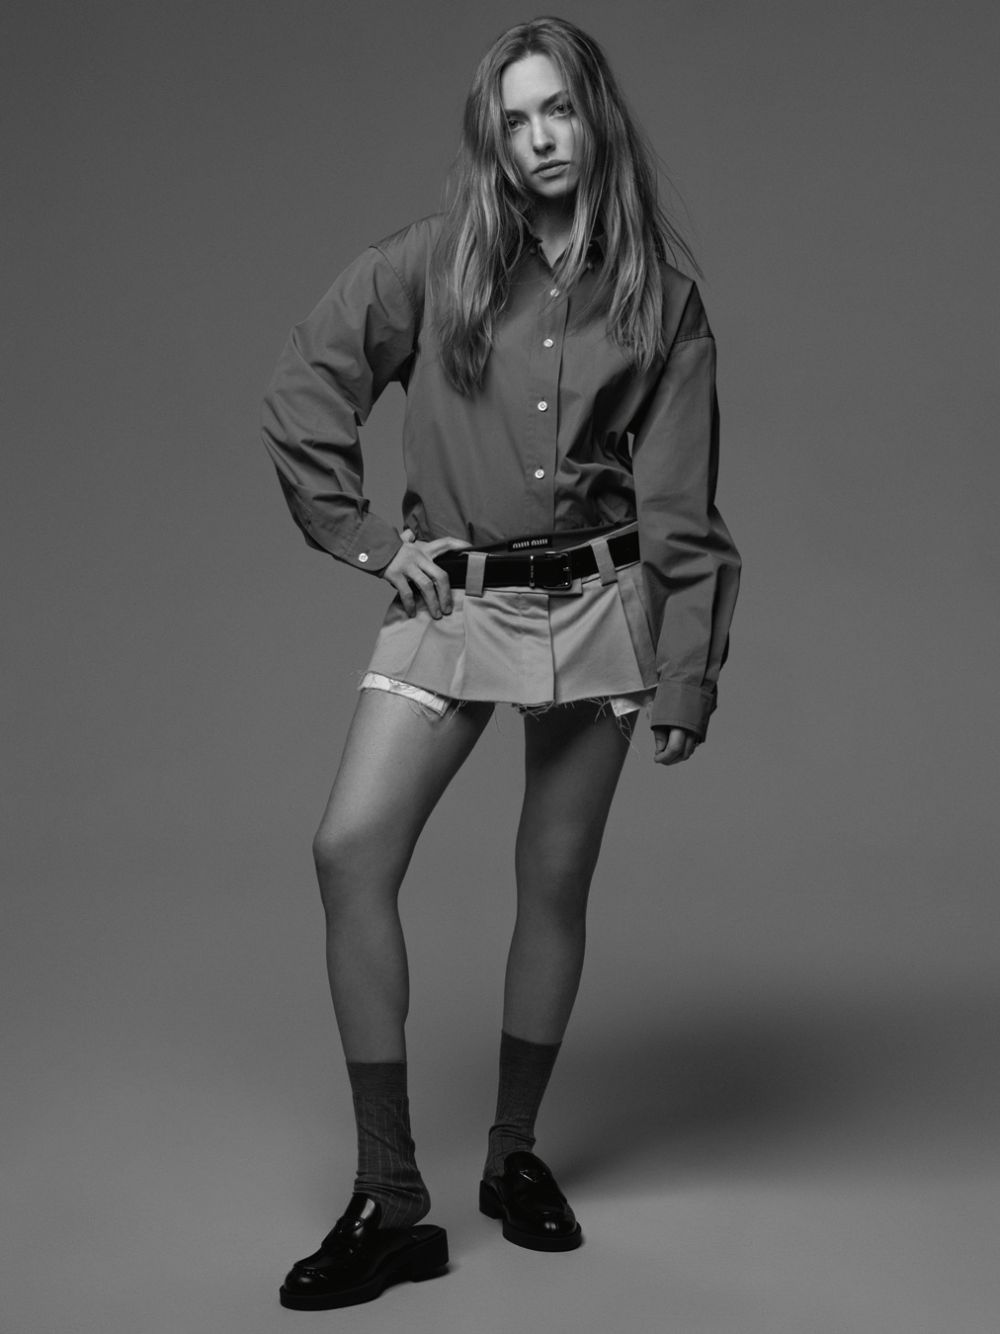 Amanda Seyfried in Miu Miu by Mark Seliger for Heroine Magazine Summer 2022